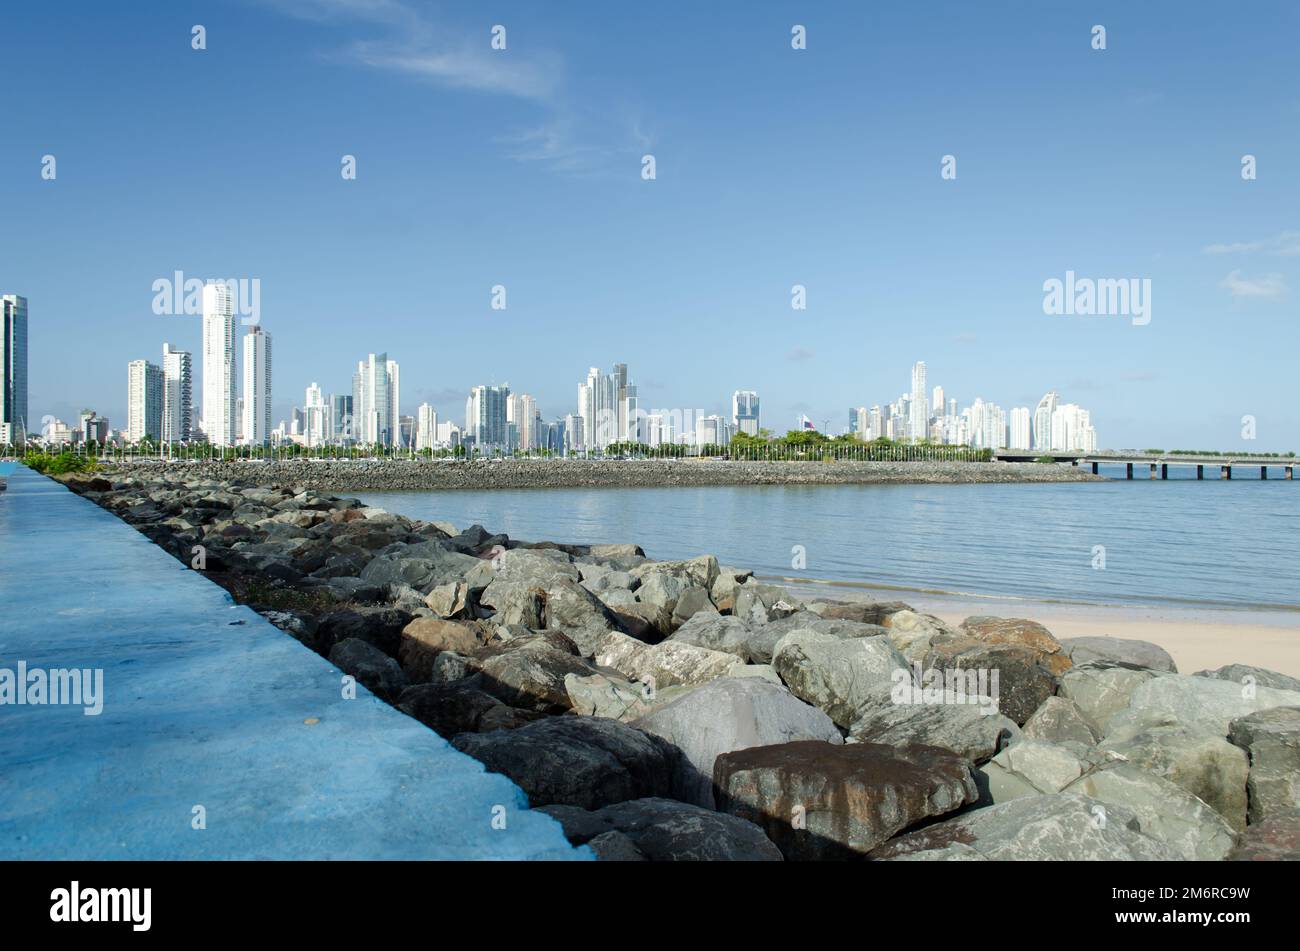 Panama City skyline as seen from Plaza V Centenario at the entrance to Old City in San Felipe Stock Photo